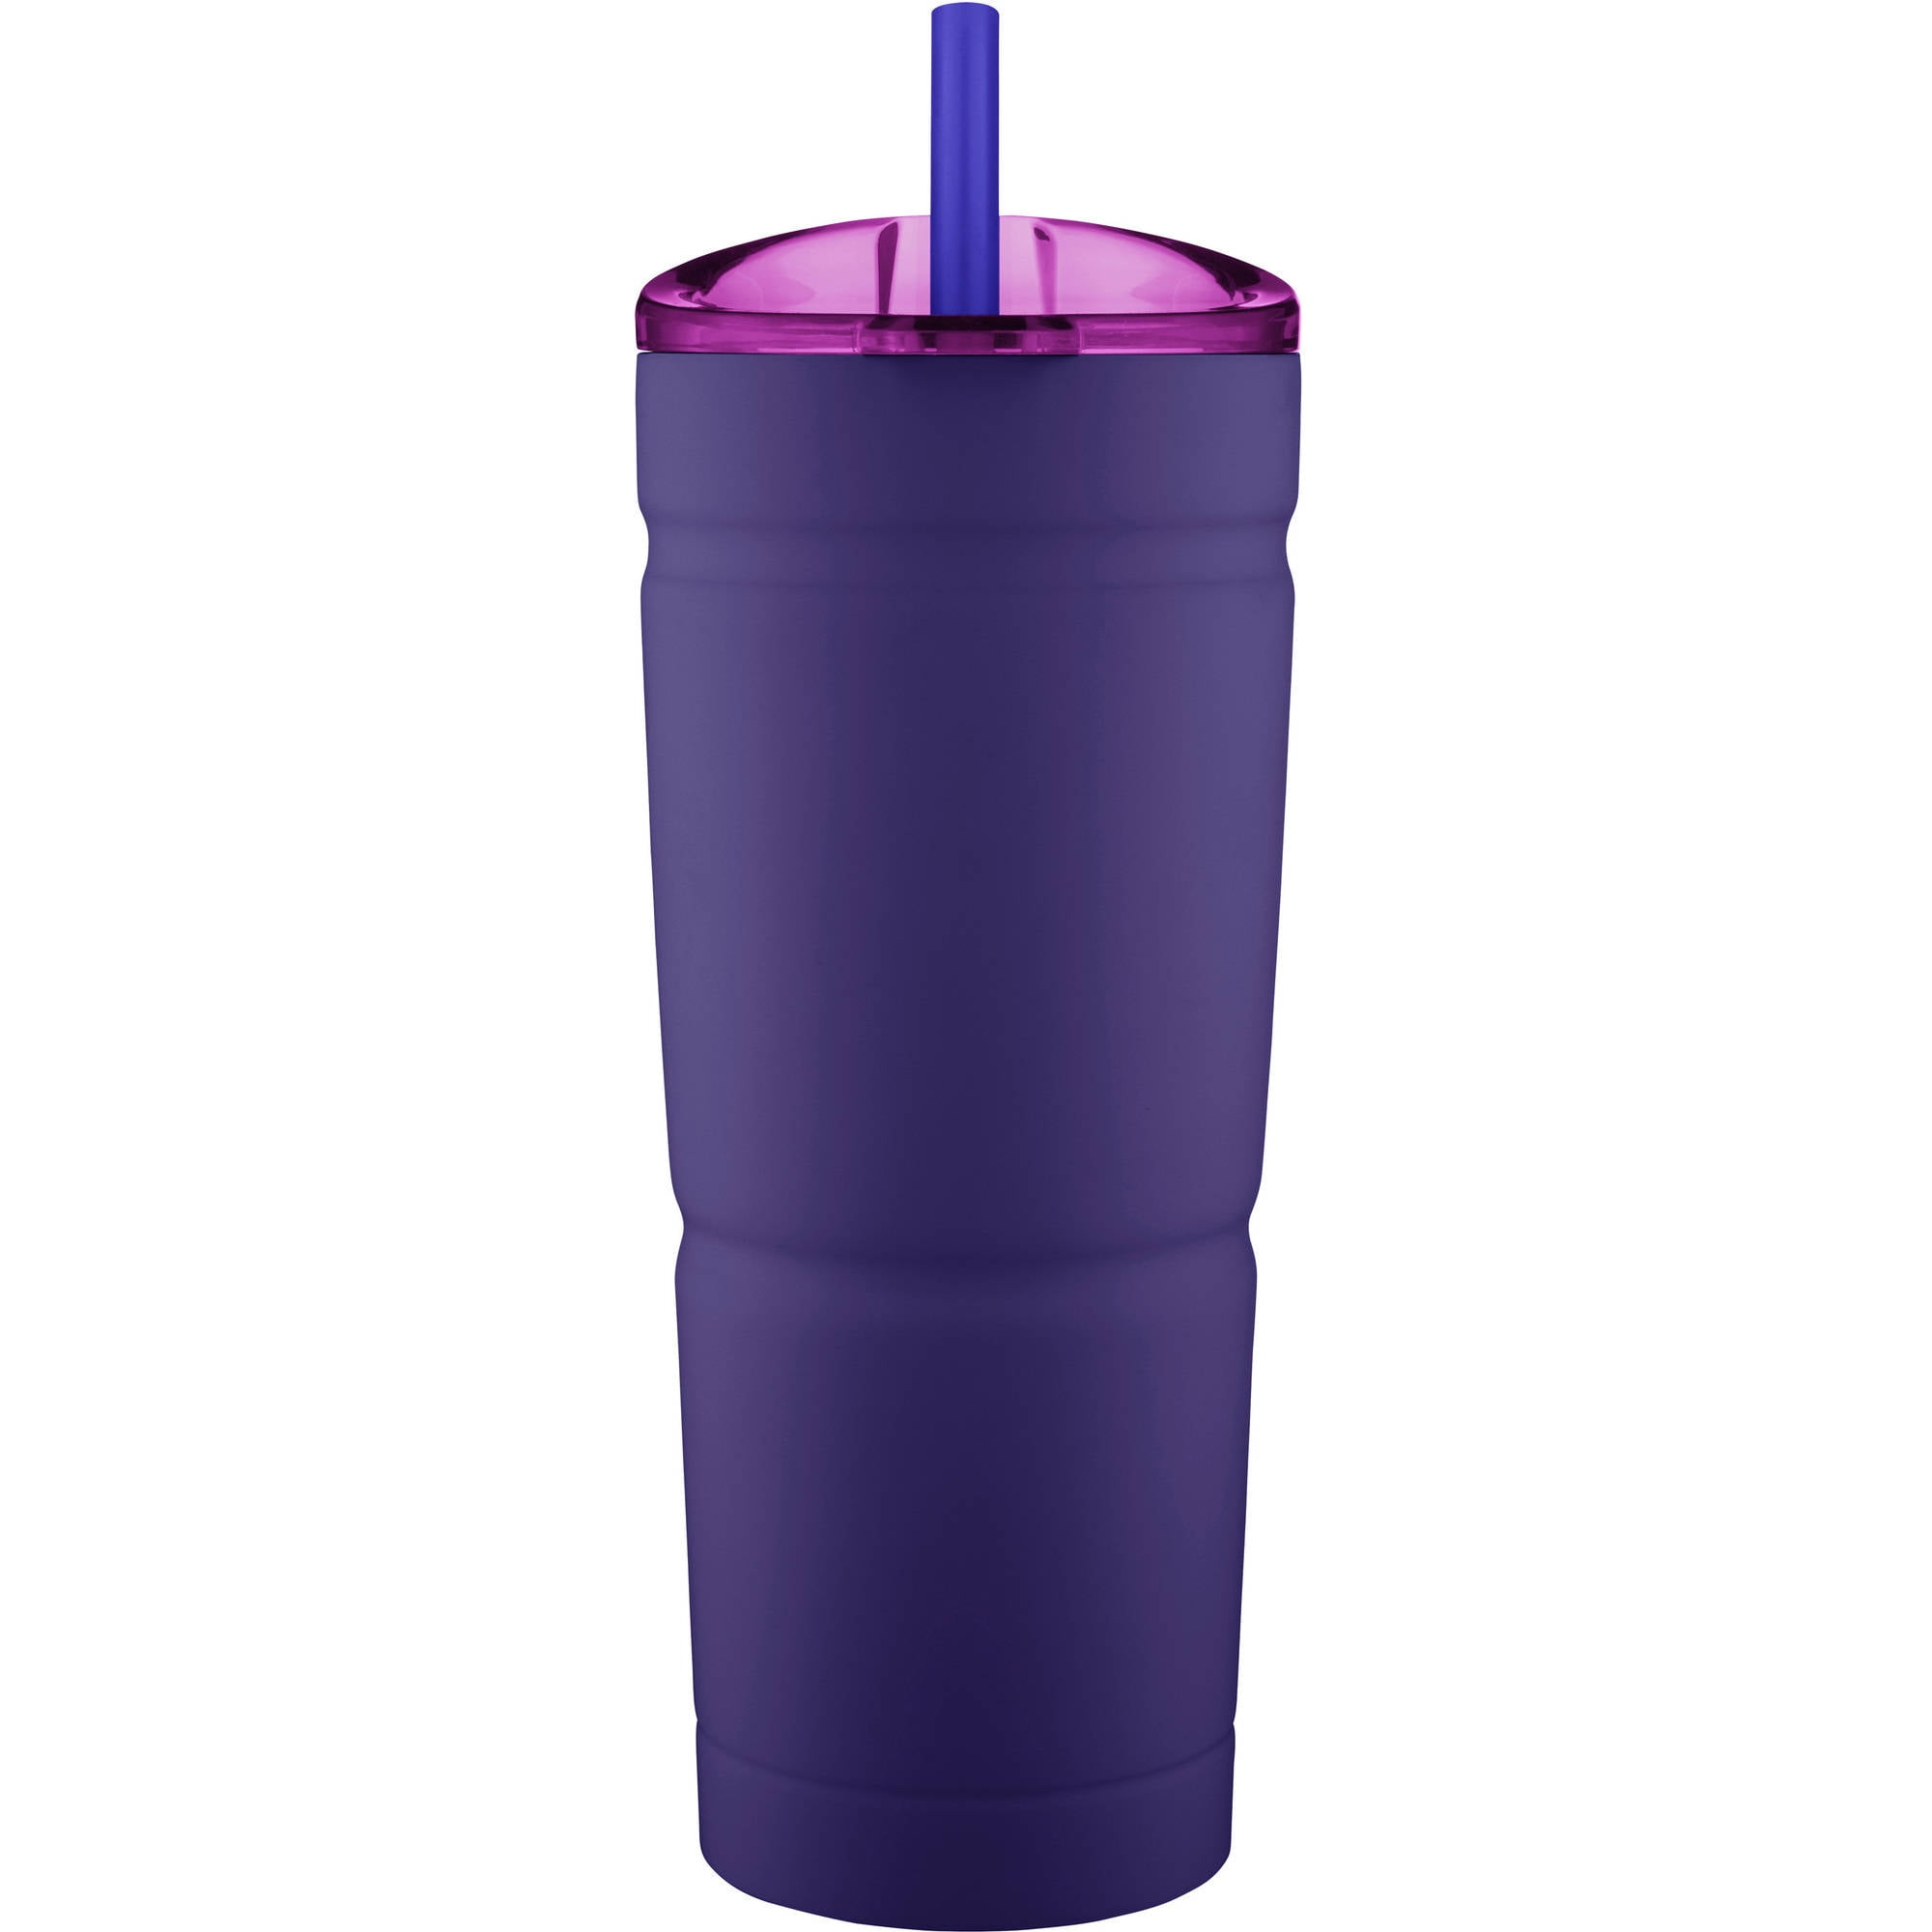 Bubba Purple Radiant Chug Stainless Steel Water Bottle, 24 Oz.